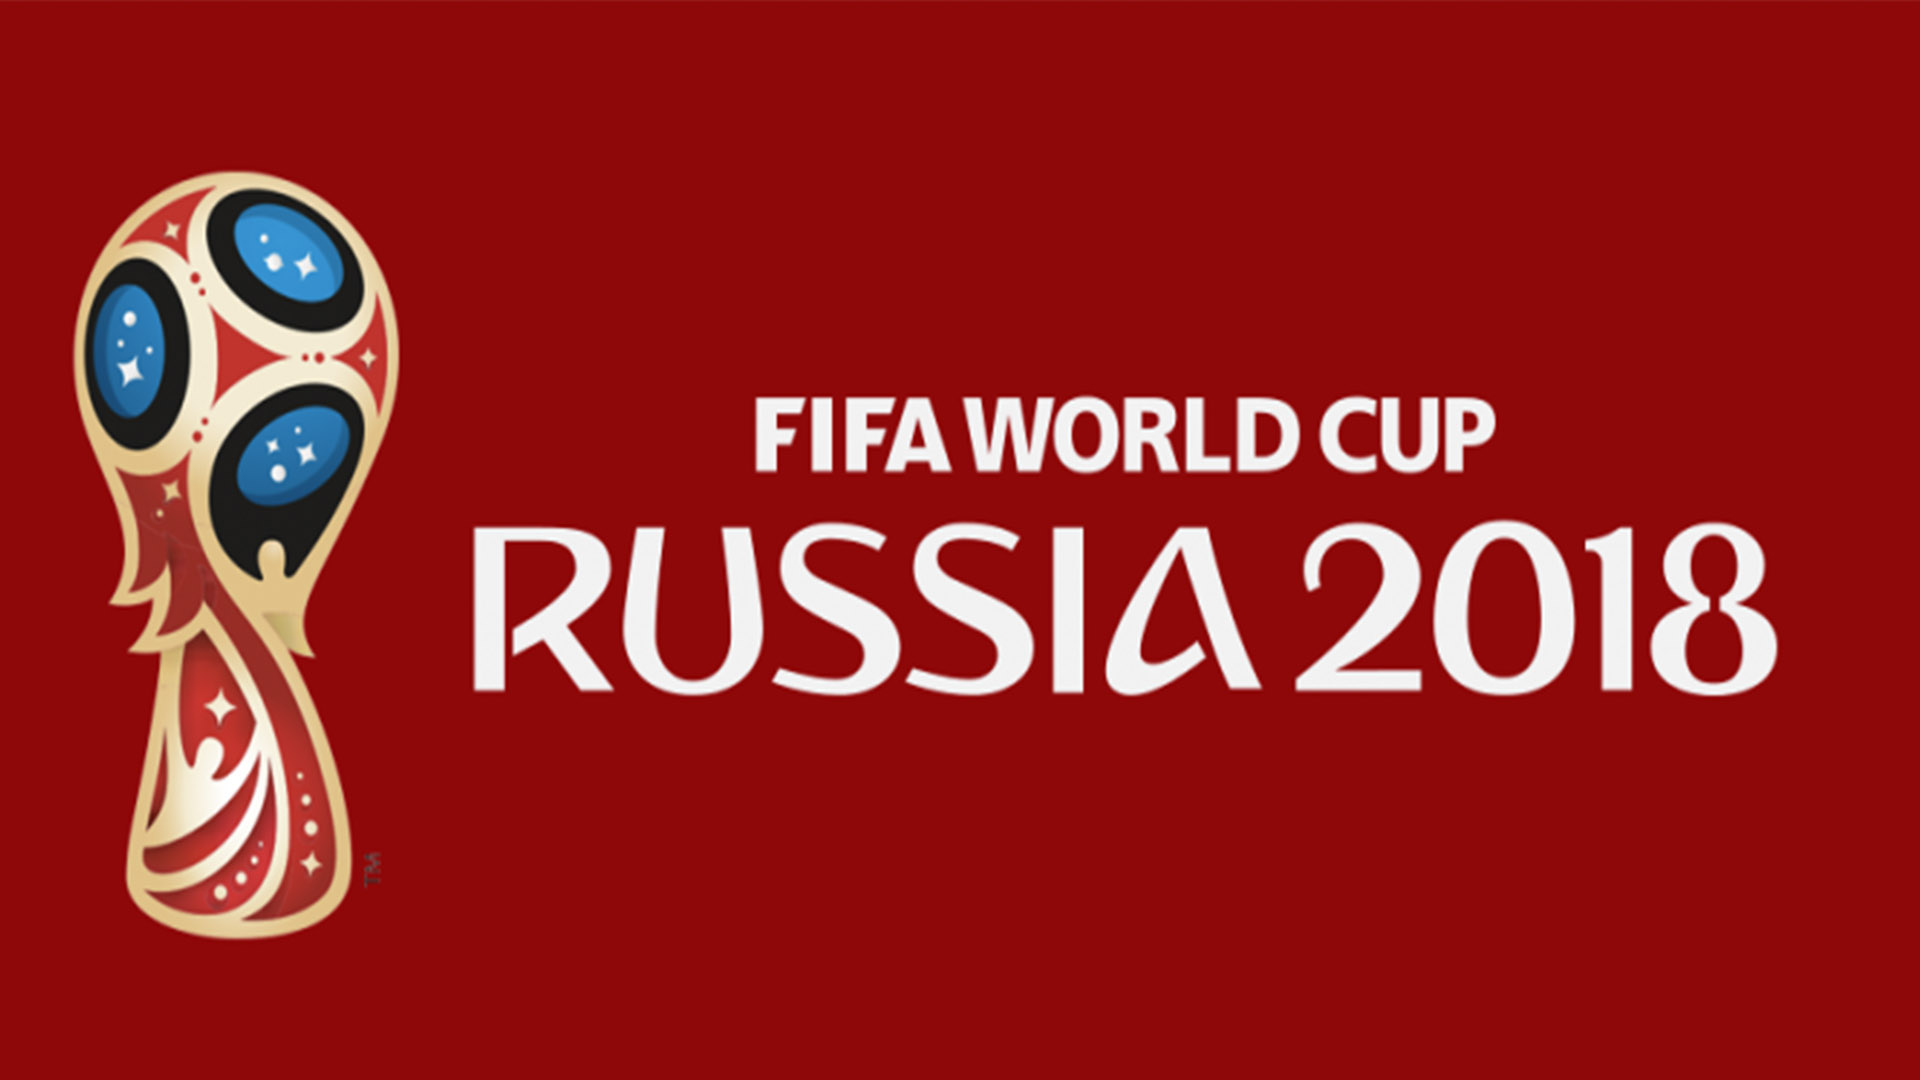 fifa world cup image hd